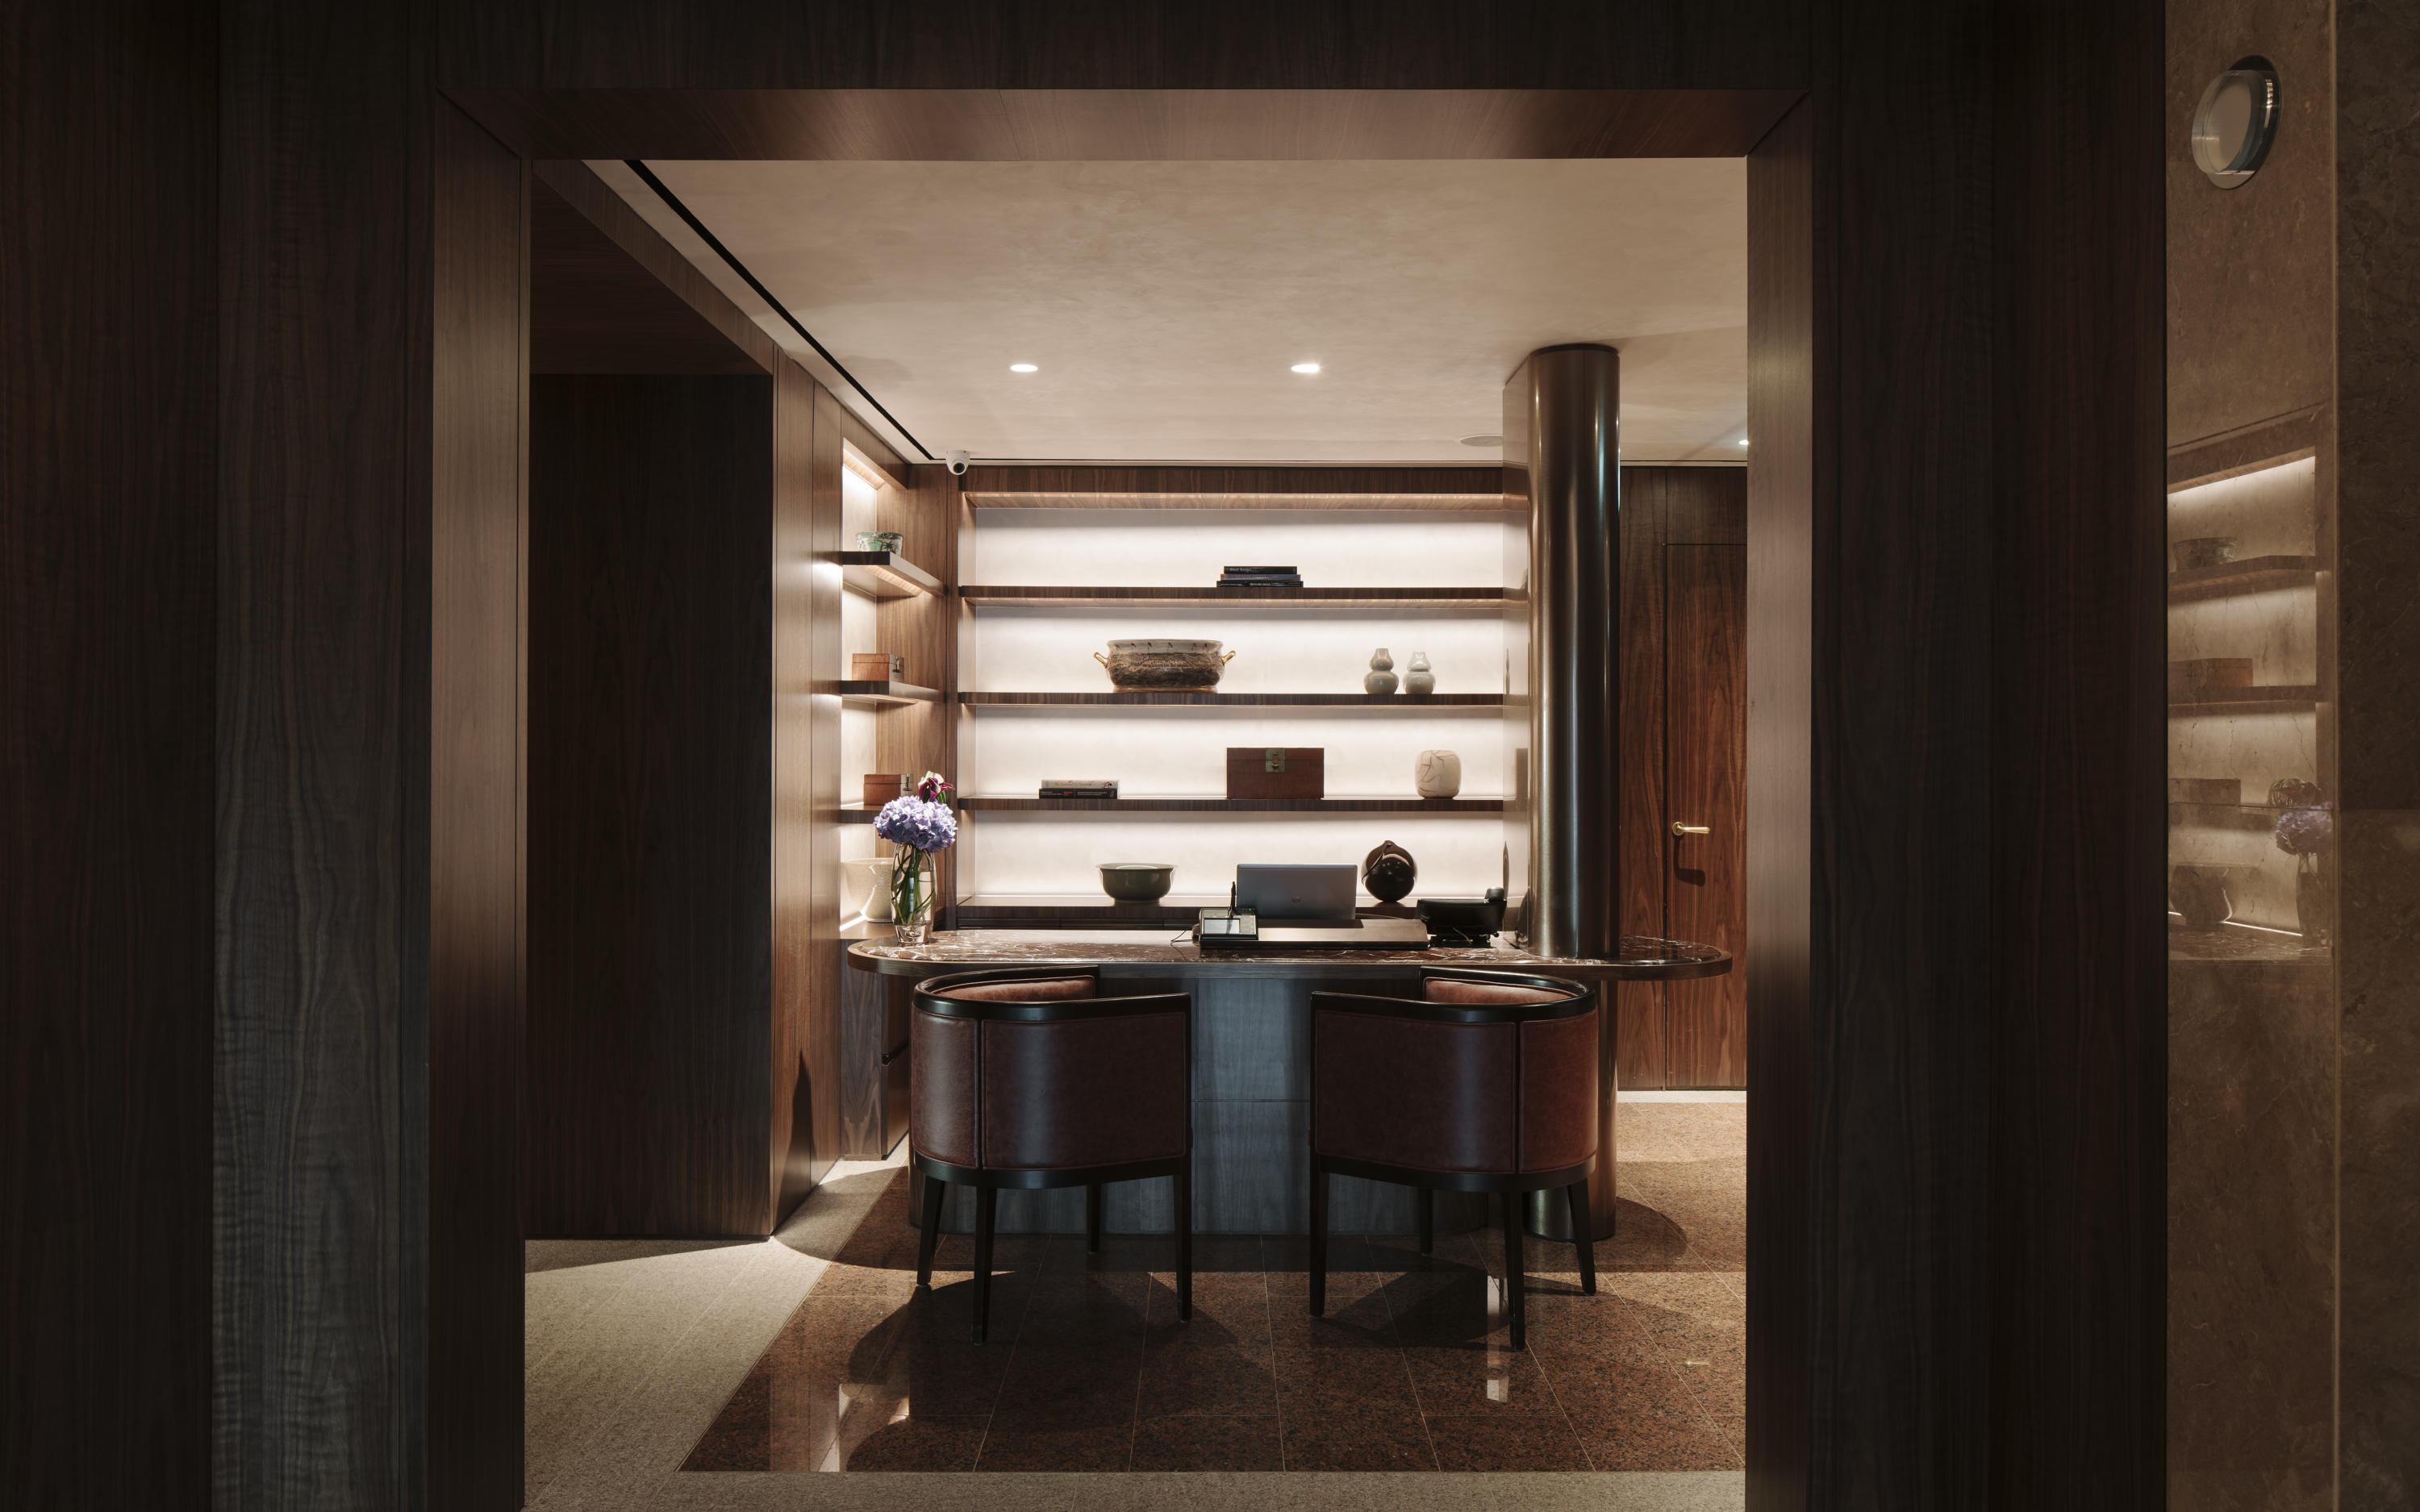 Executive Lounge Conrad Hotel By Brewin Design Office Hotel Interiors,Home Interior Design Ideas For Small Living Room